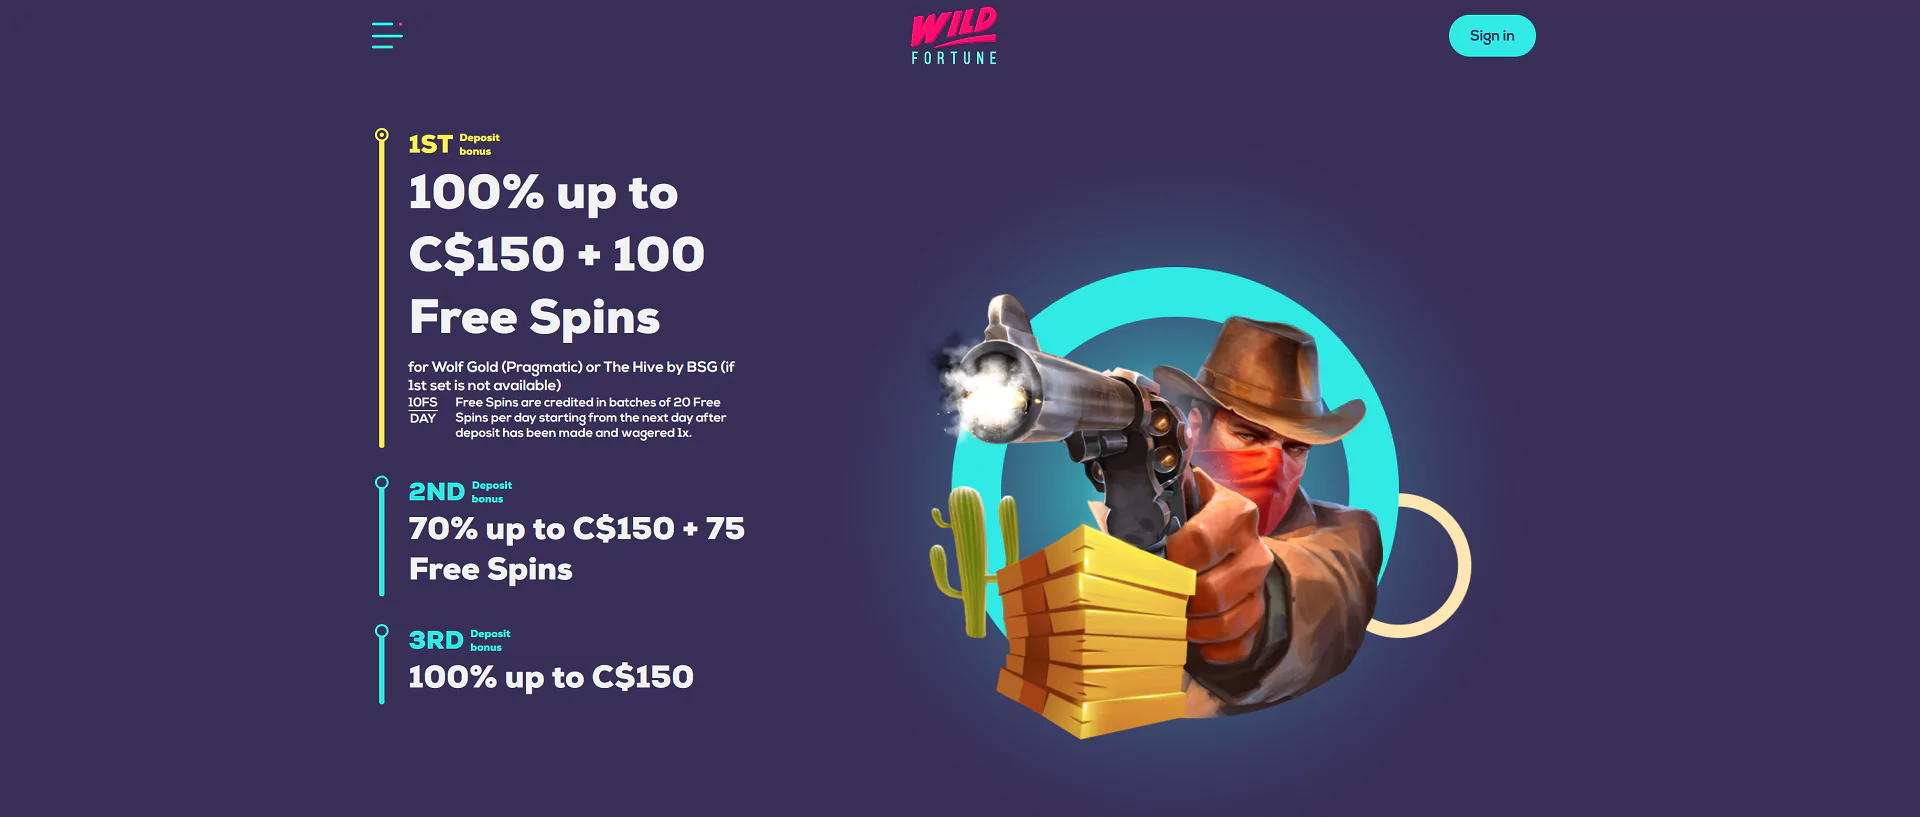 Screenshot of the Wild Fortune Bonuses